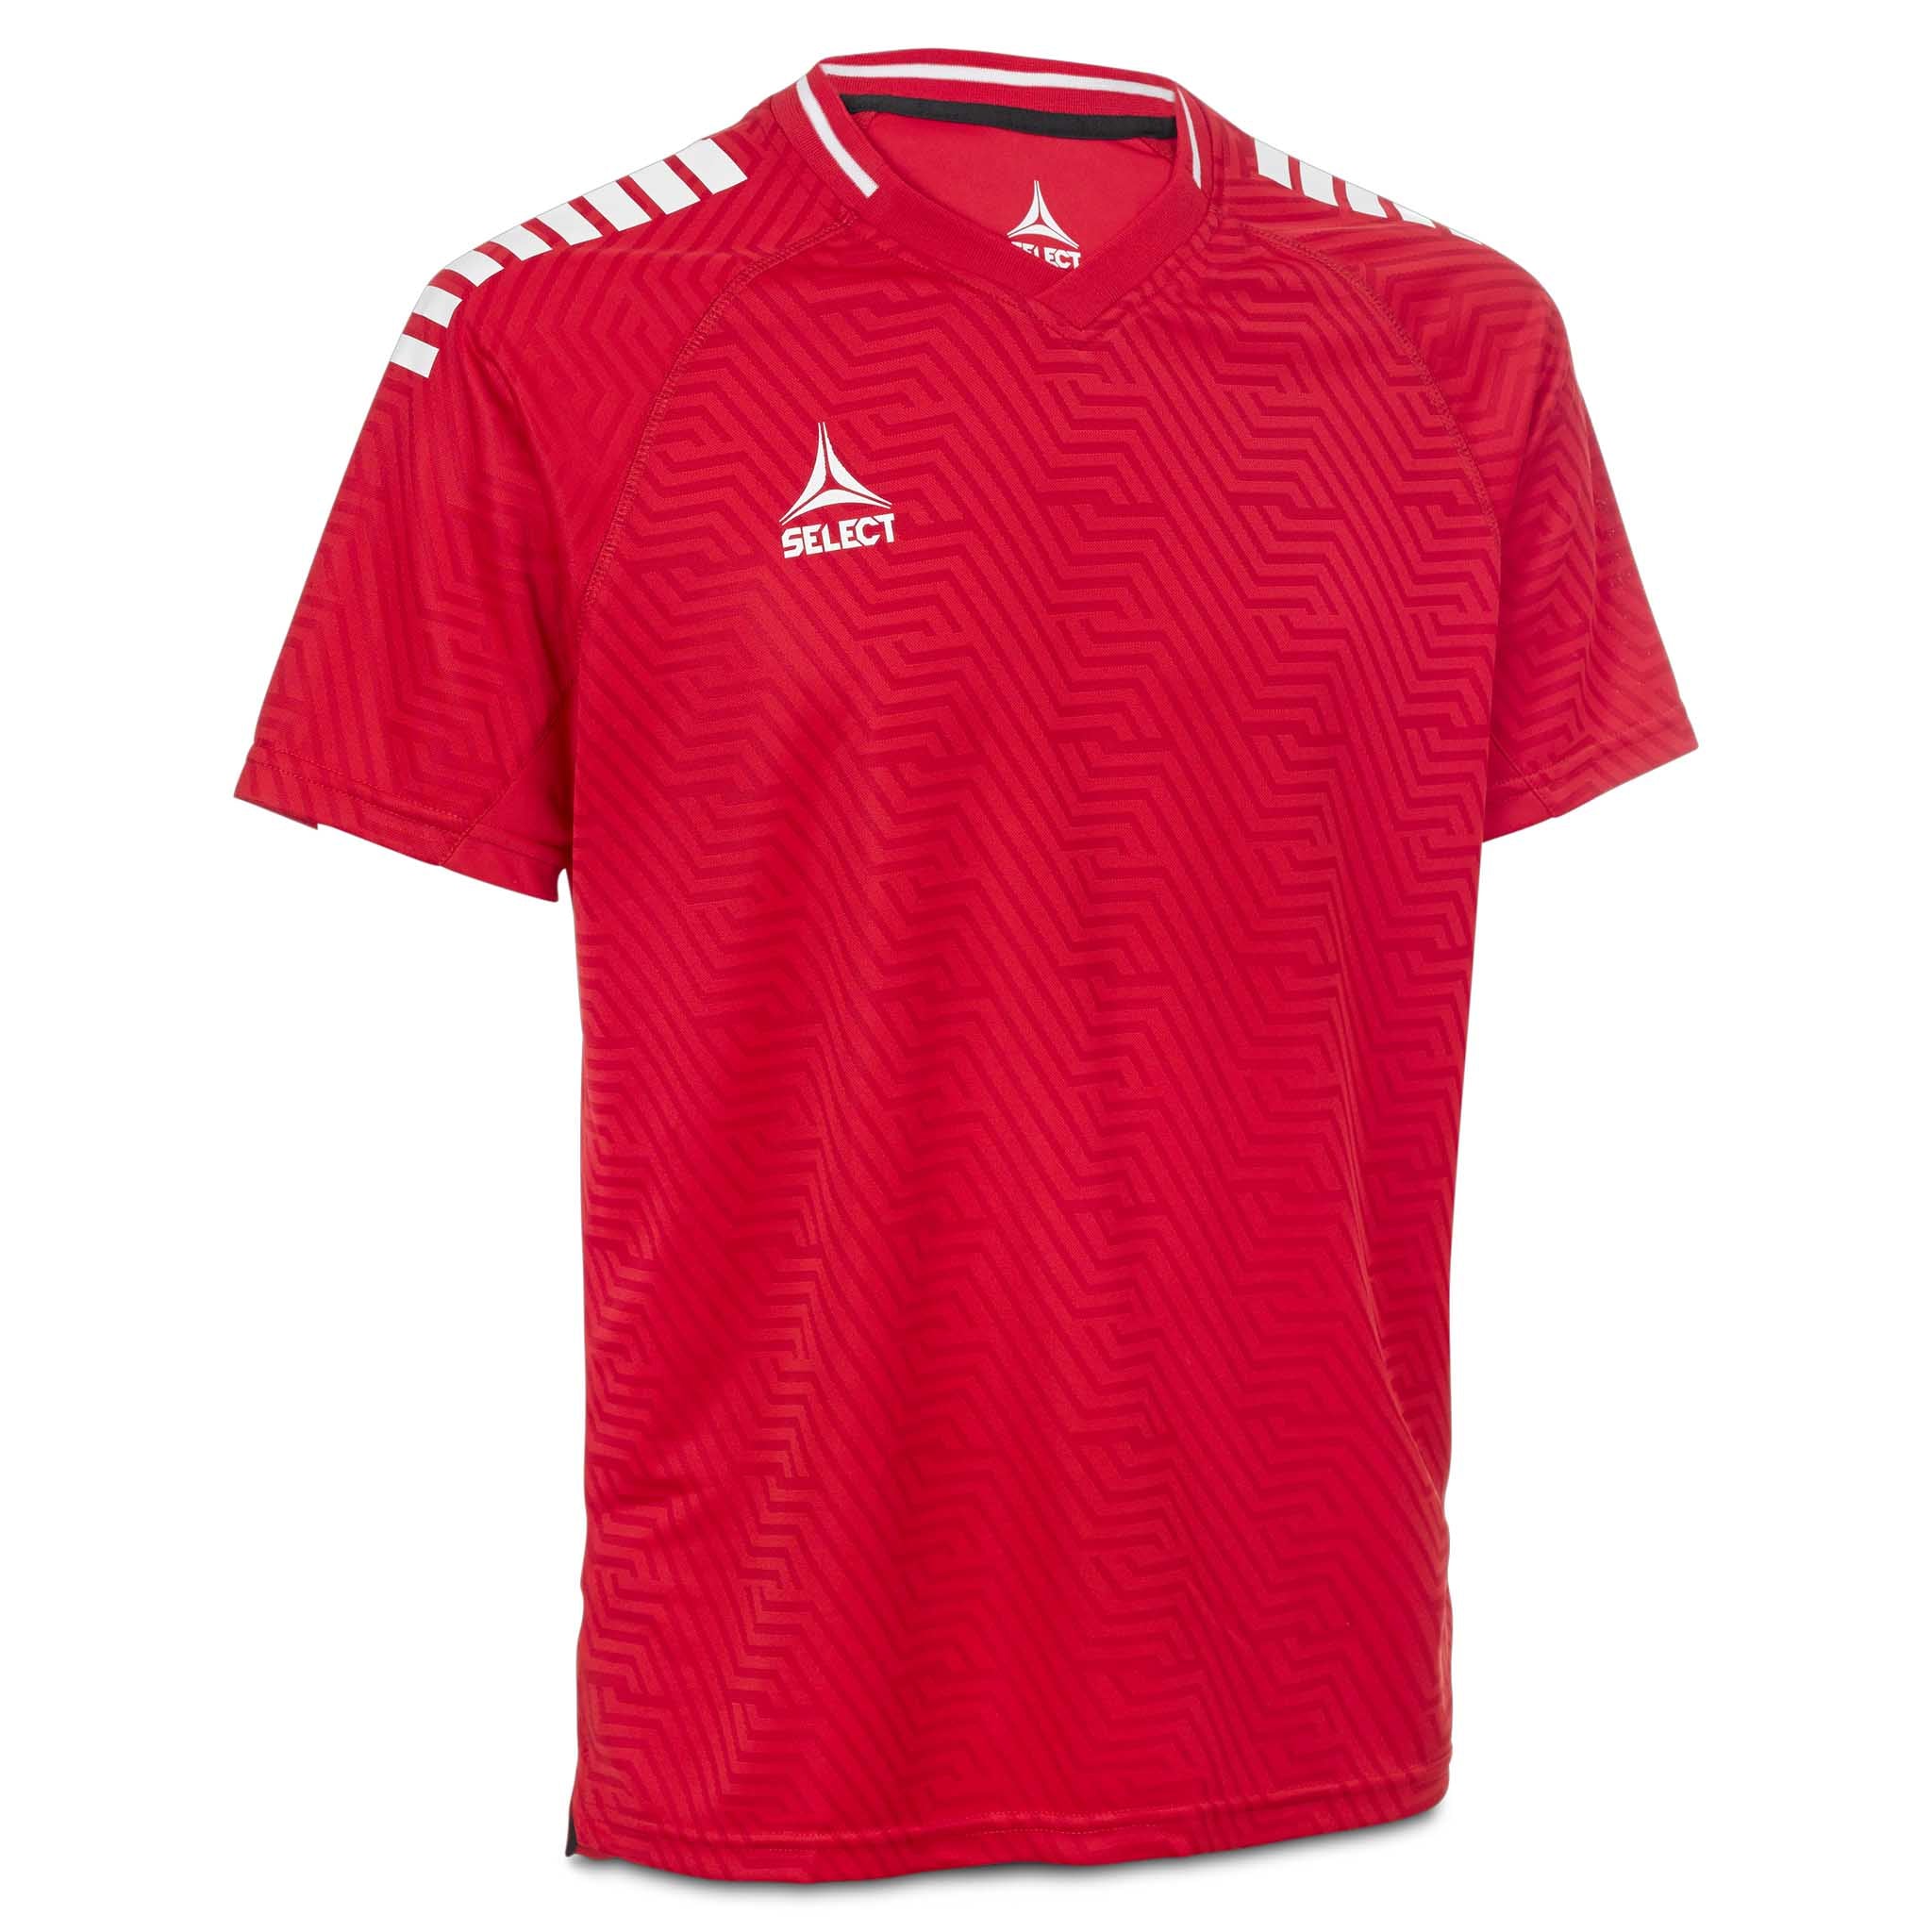 Monaco Player shirt S/S #colour_red/white